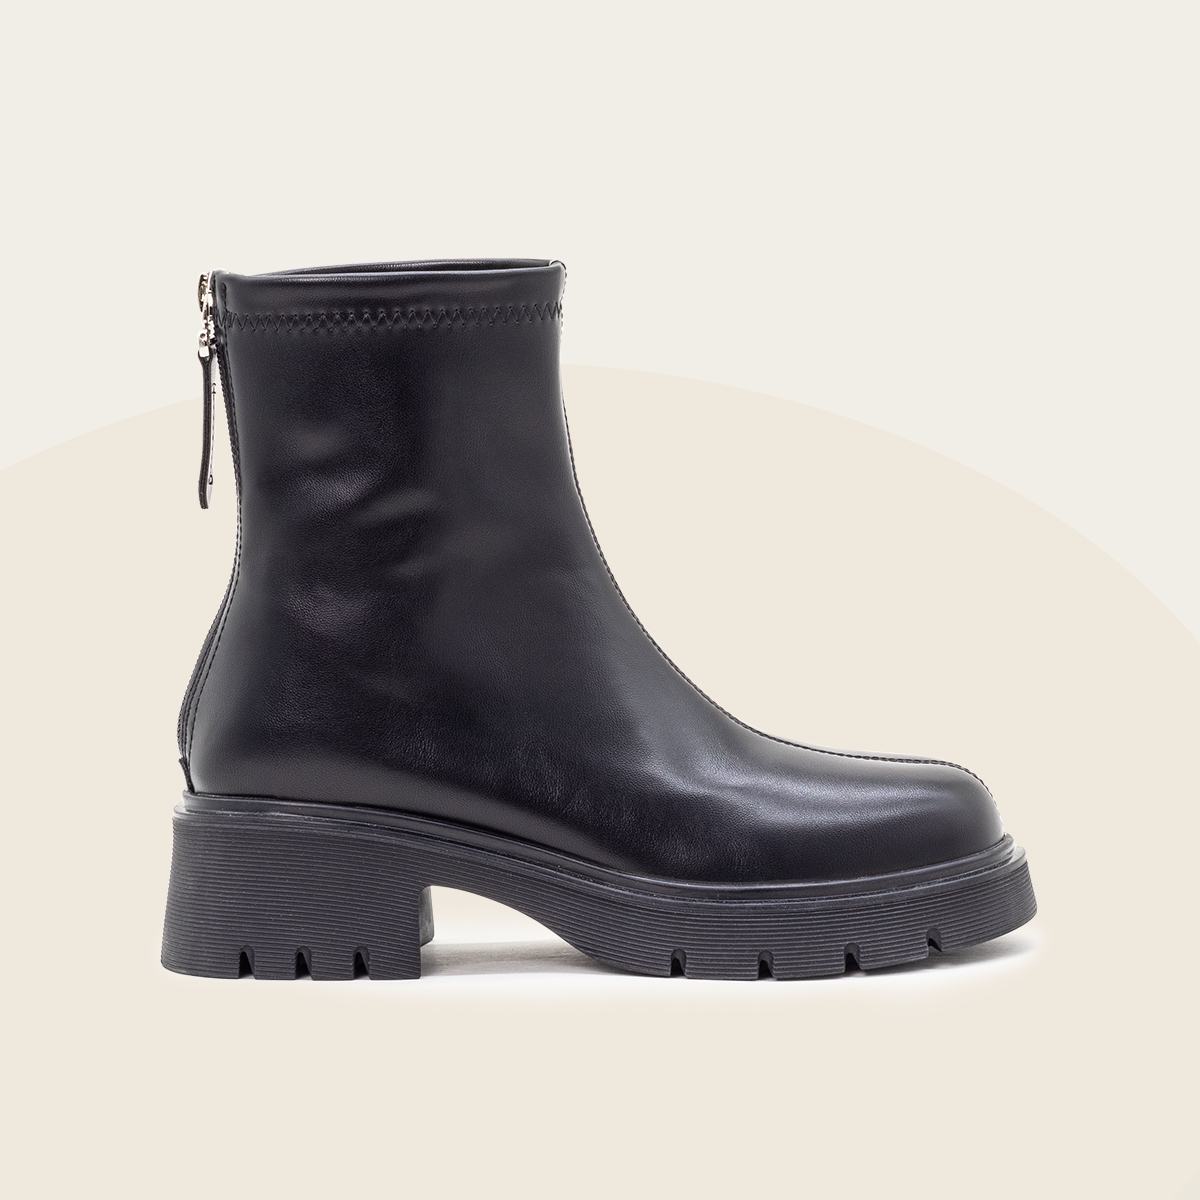 Giày bốt nữ Unie Ankle Boots đế đúc cao 6p da mềm bAimée & bAmor MS0003